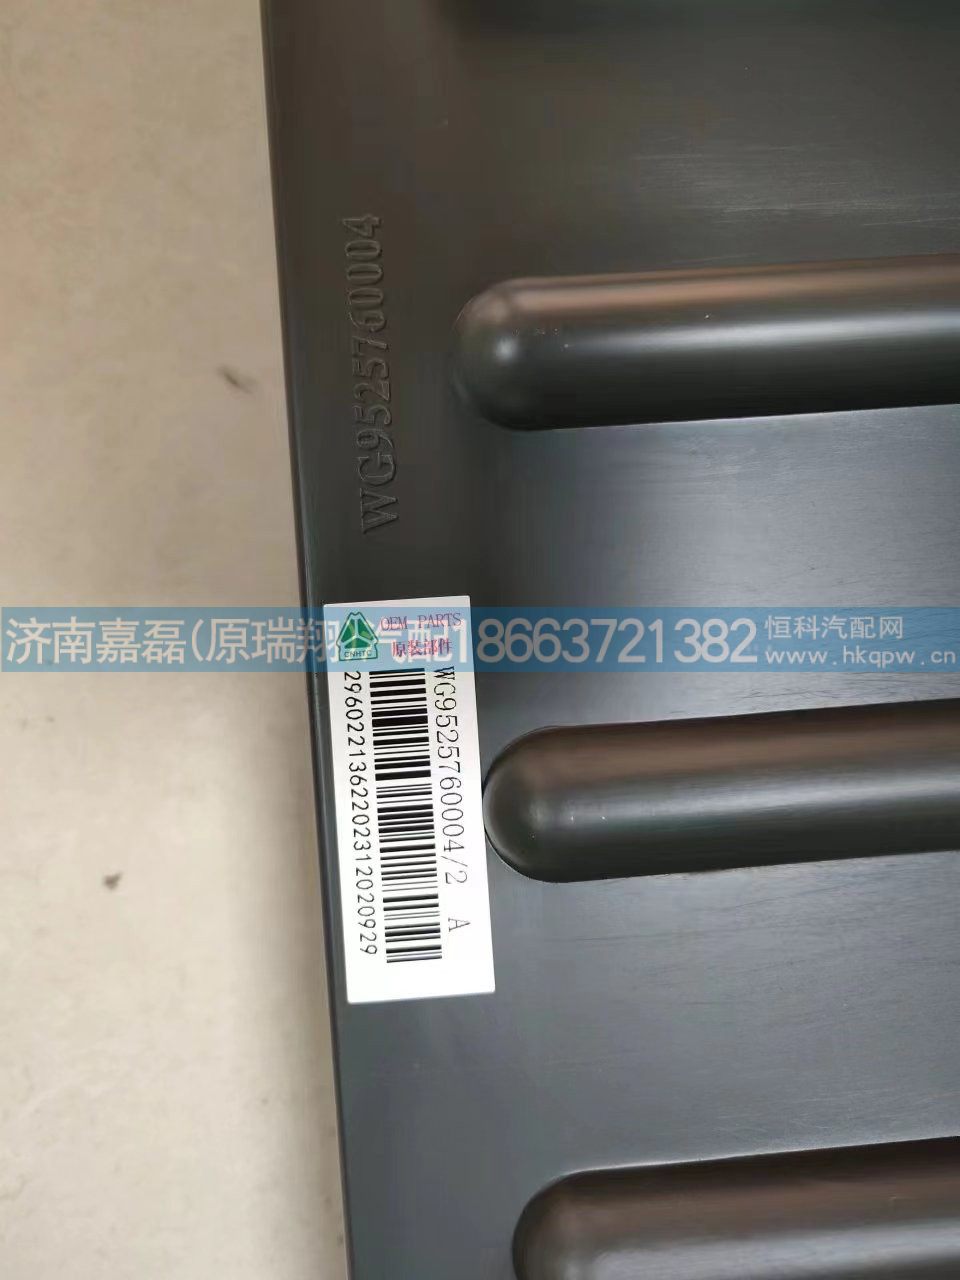 WG9525760004,电瓶箱盖,济南嘉磊汽车配件有限公司(原济南瑞翔)